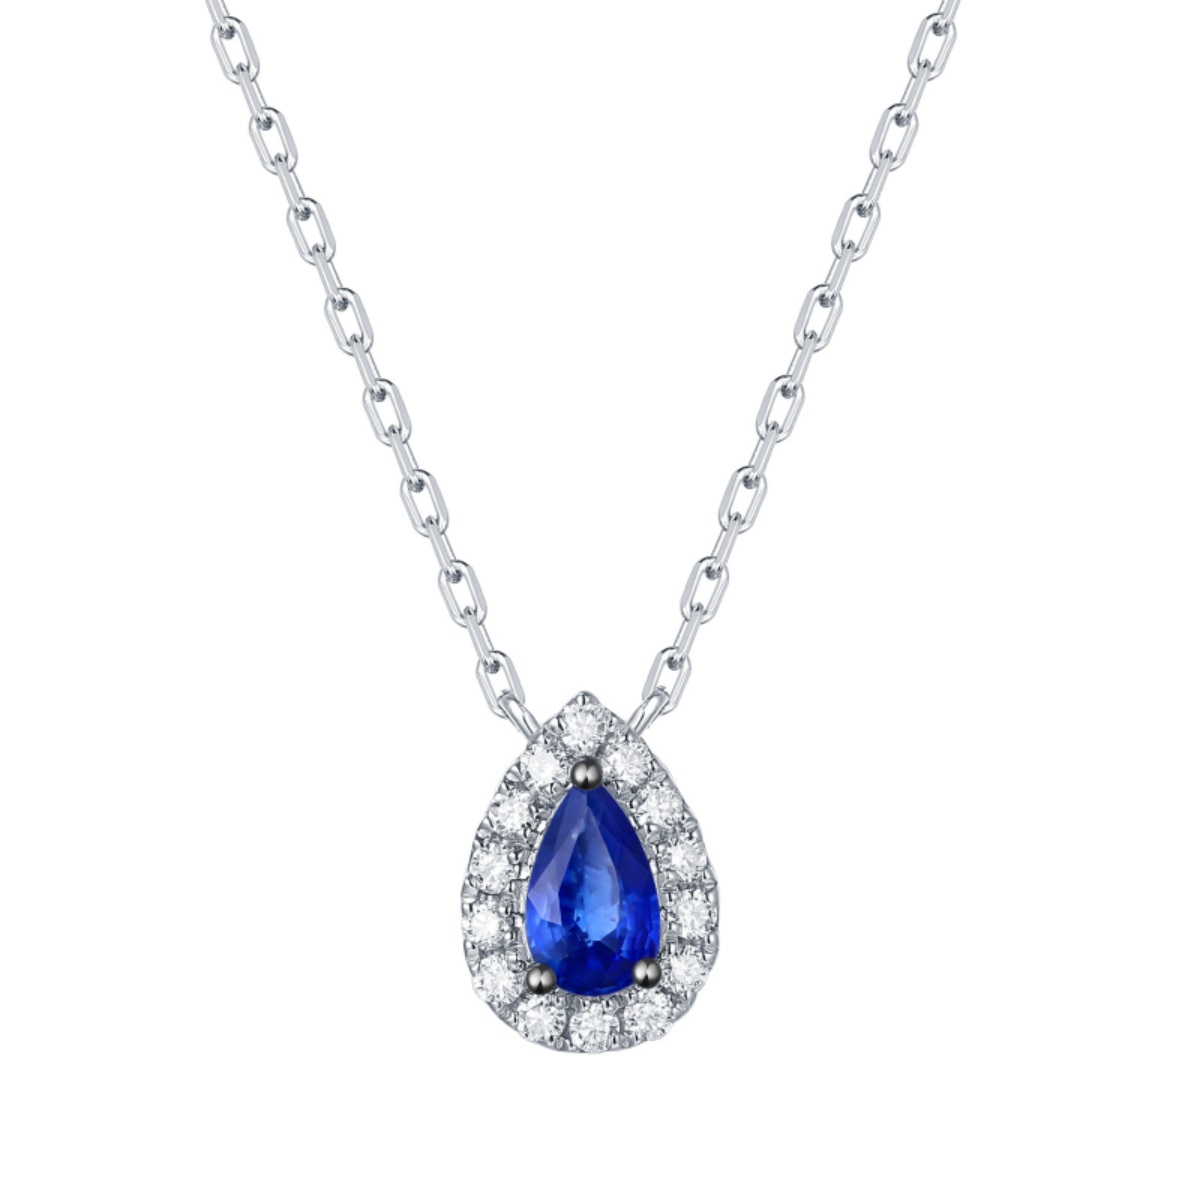 NL35366BSA – 18K White Gold Diamond and Gemstone Necklace, 0.37 TCW